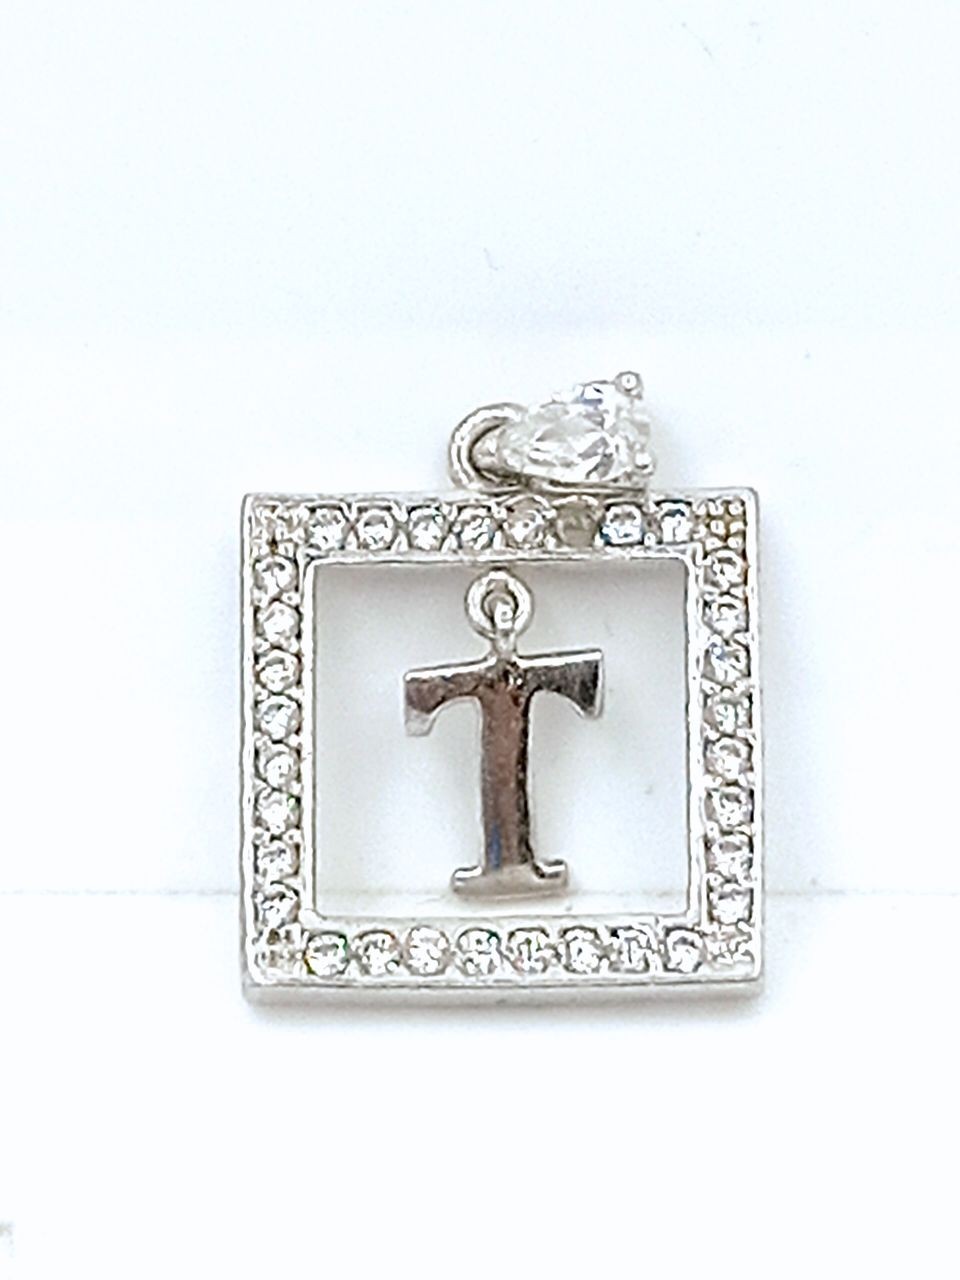 pendant of silver